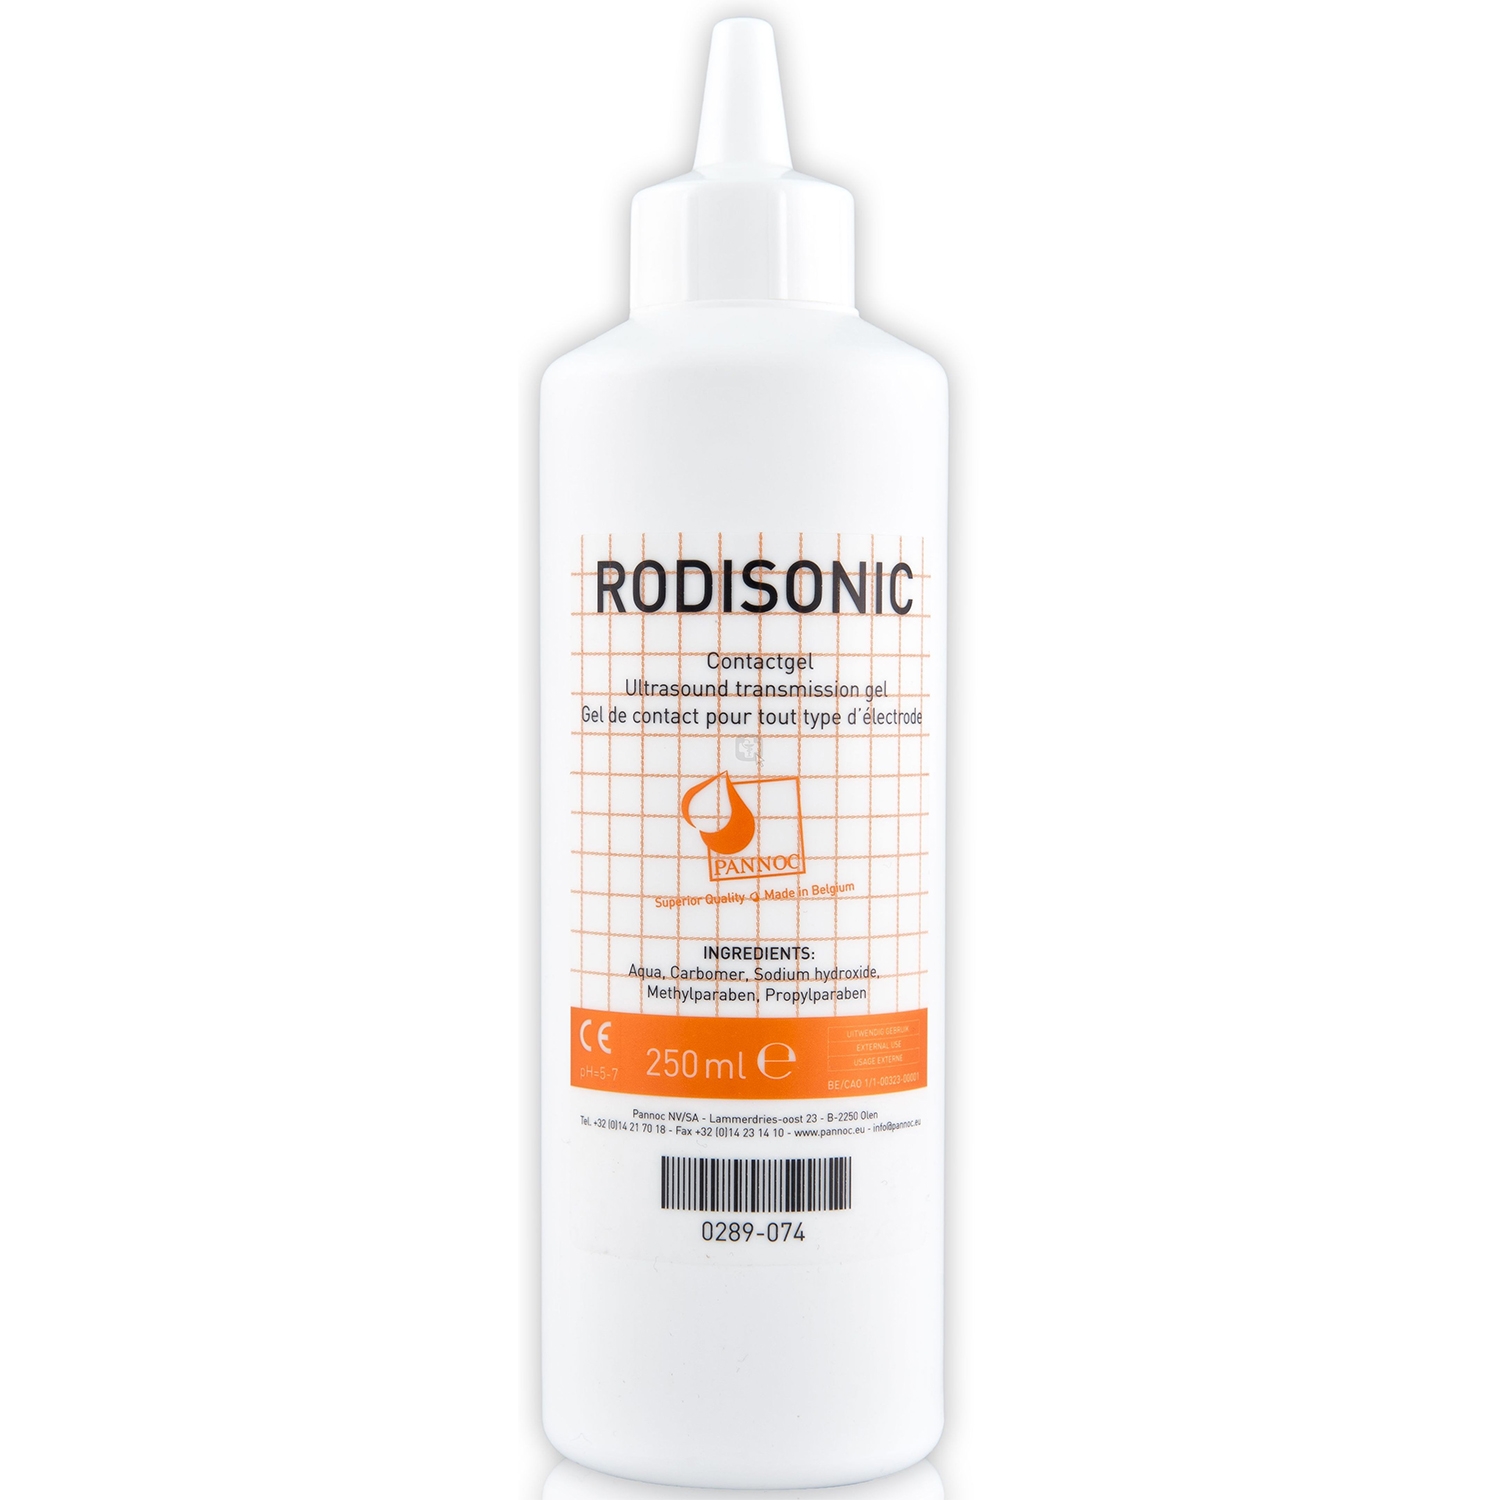 Rodisonic contact gel